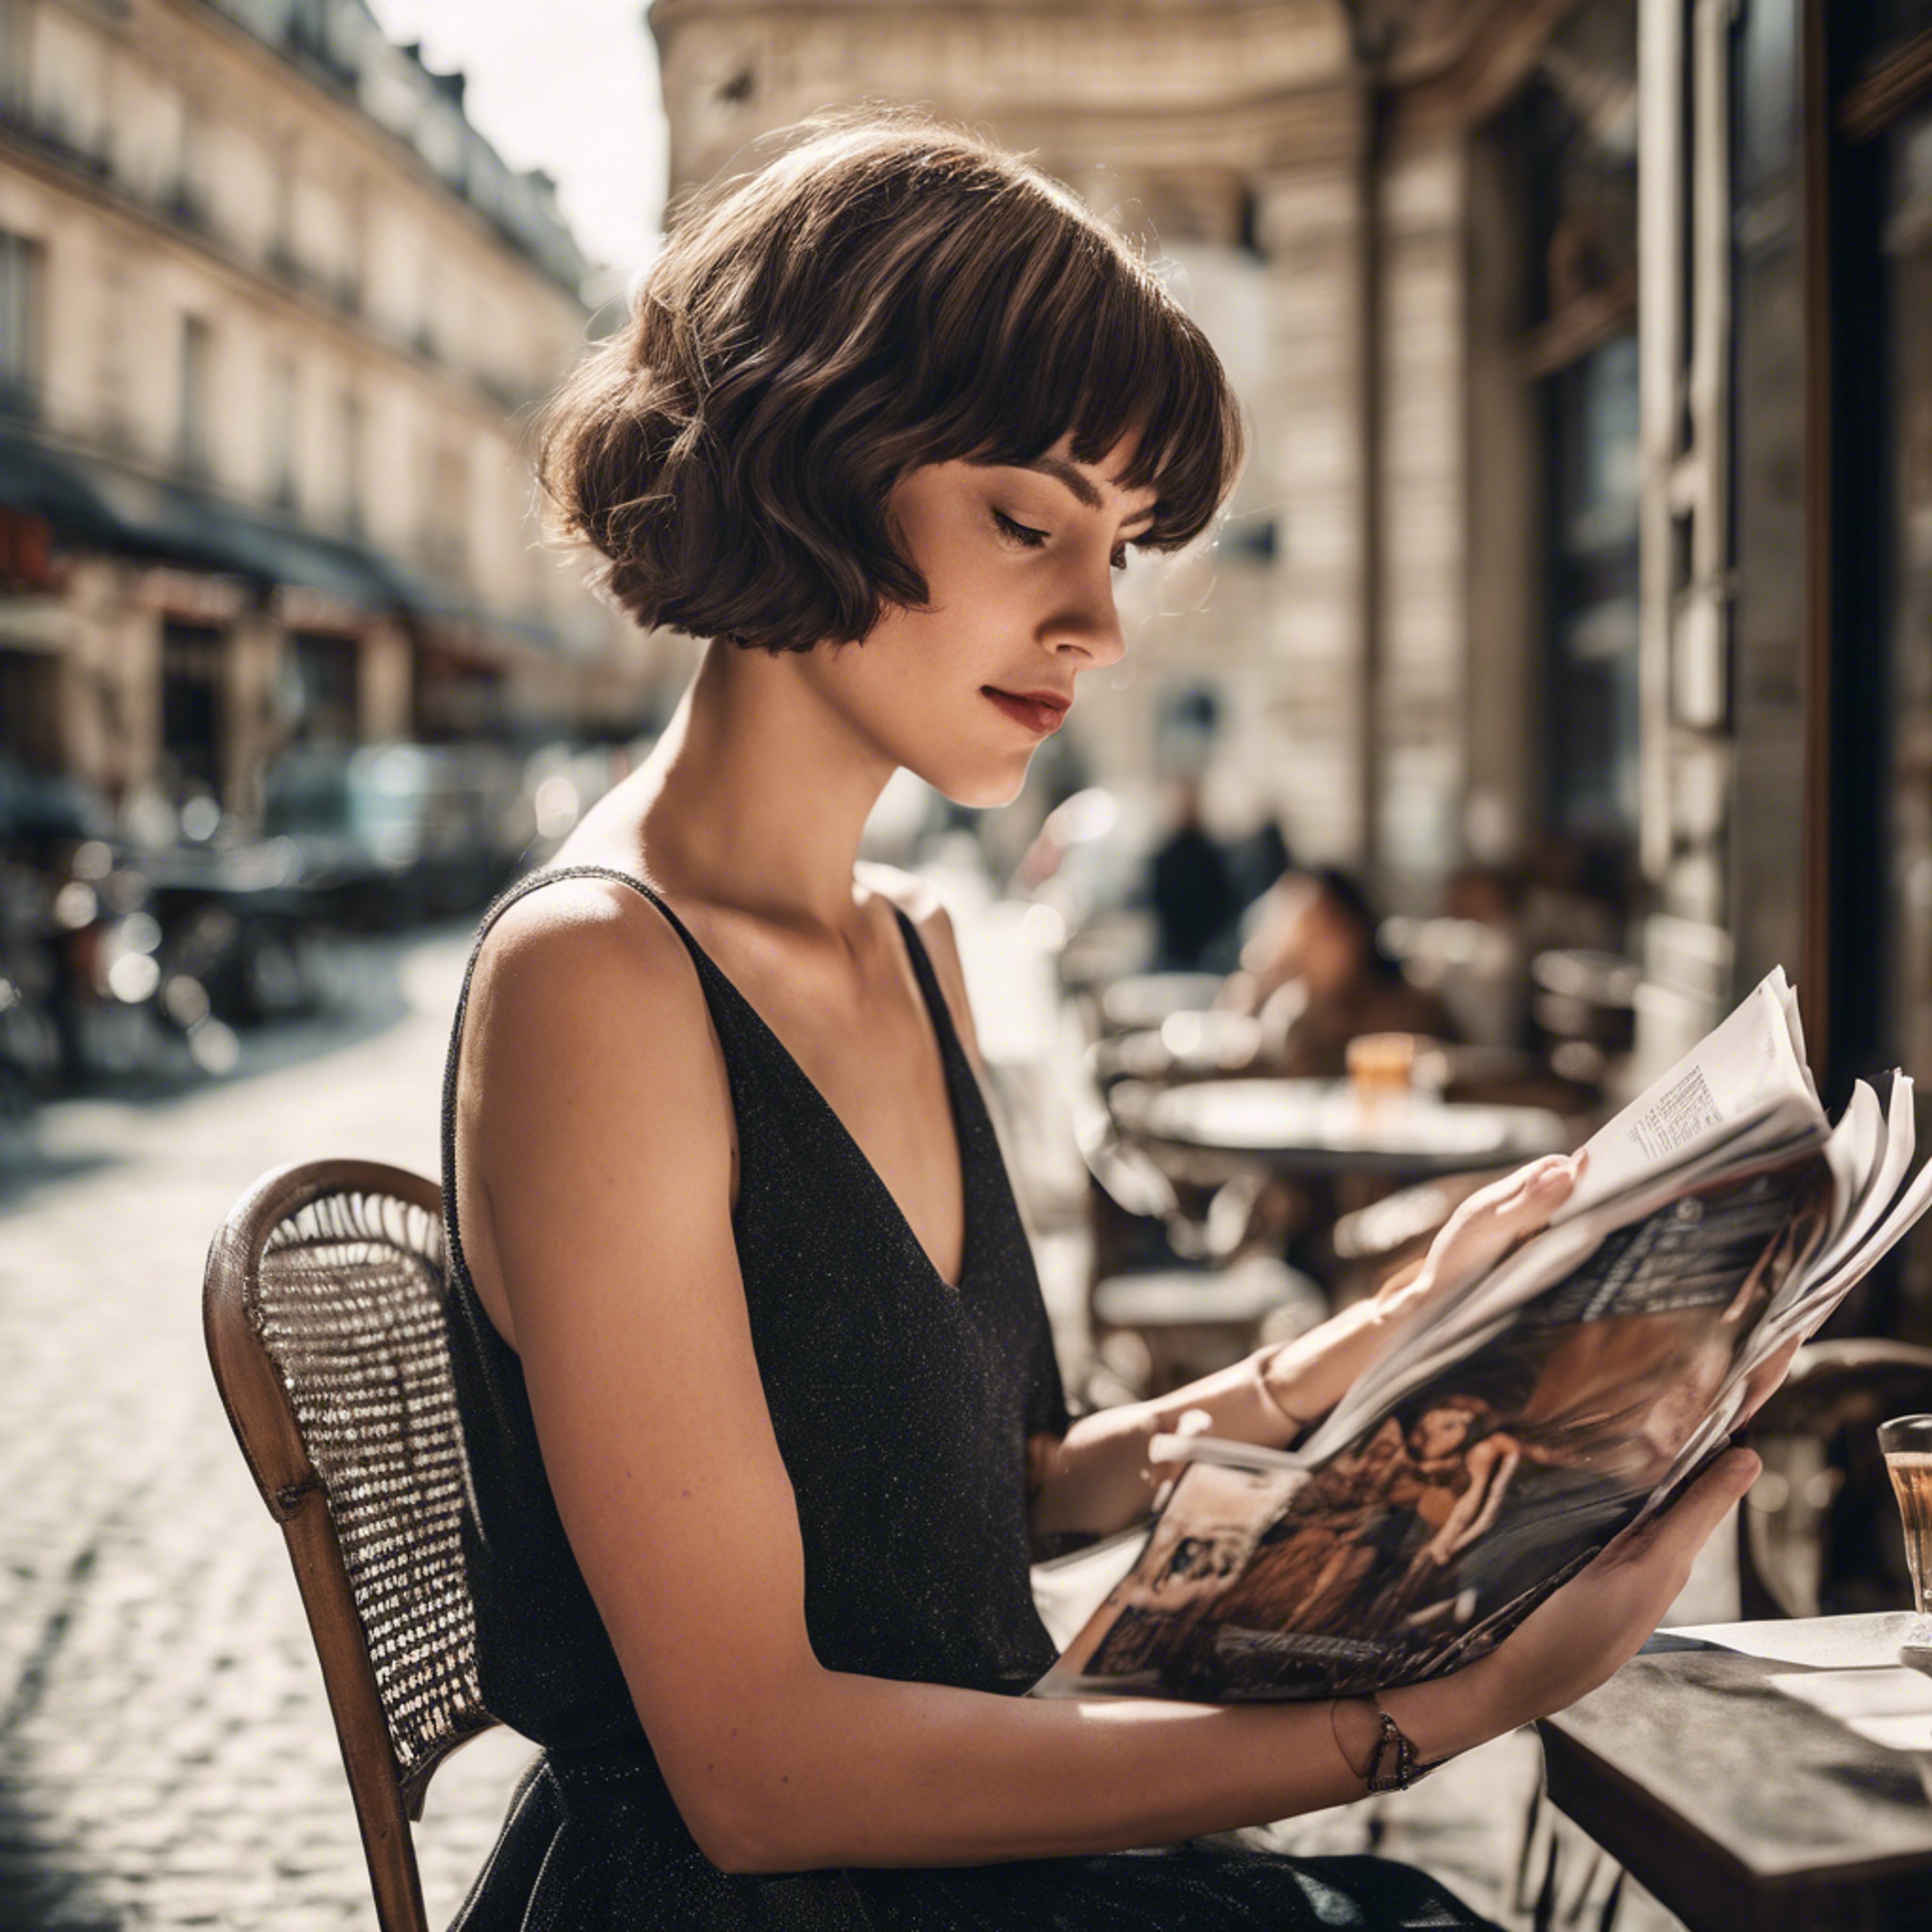 A young woman with a chic French bob haircut reading a fashion magazine at a Parisian café.壁紙[b1696e20e31b4962ac1f]